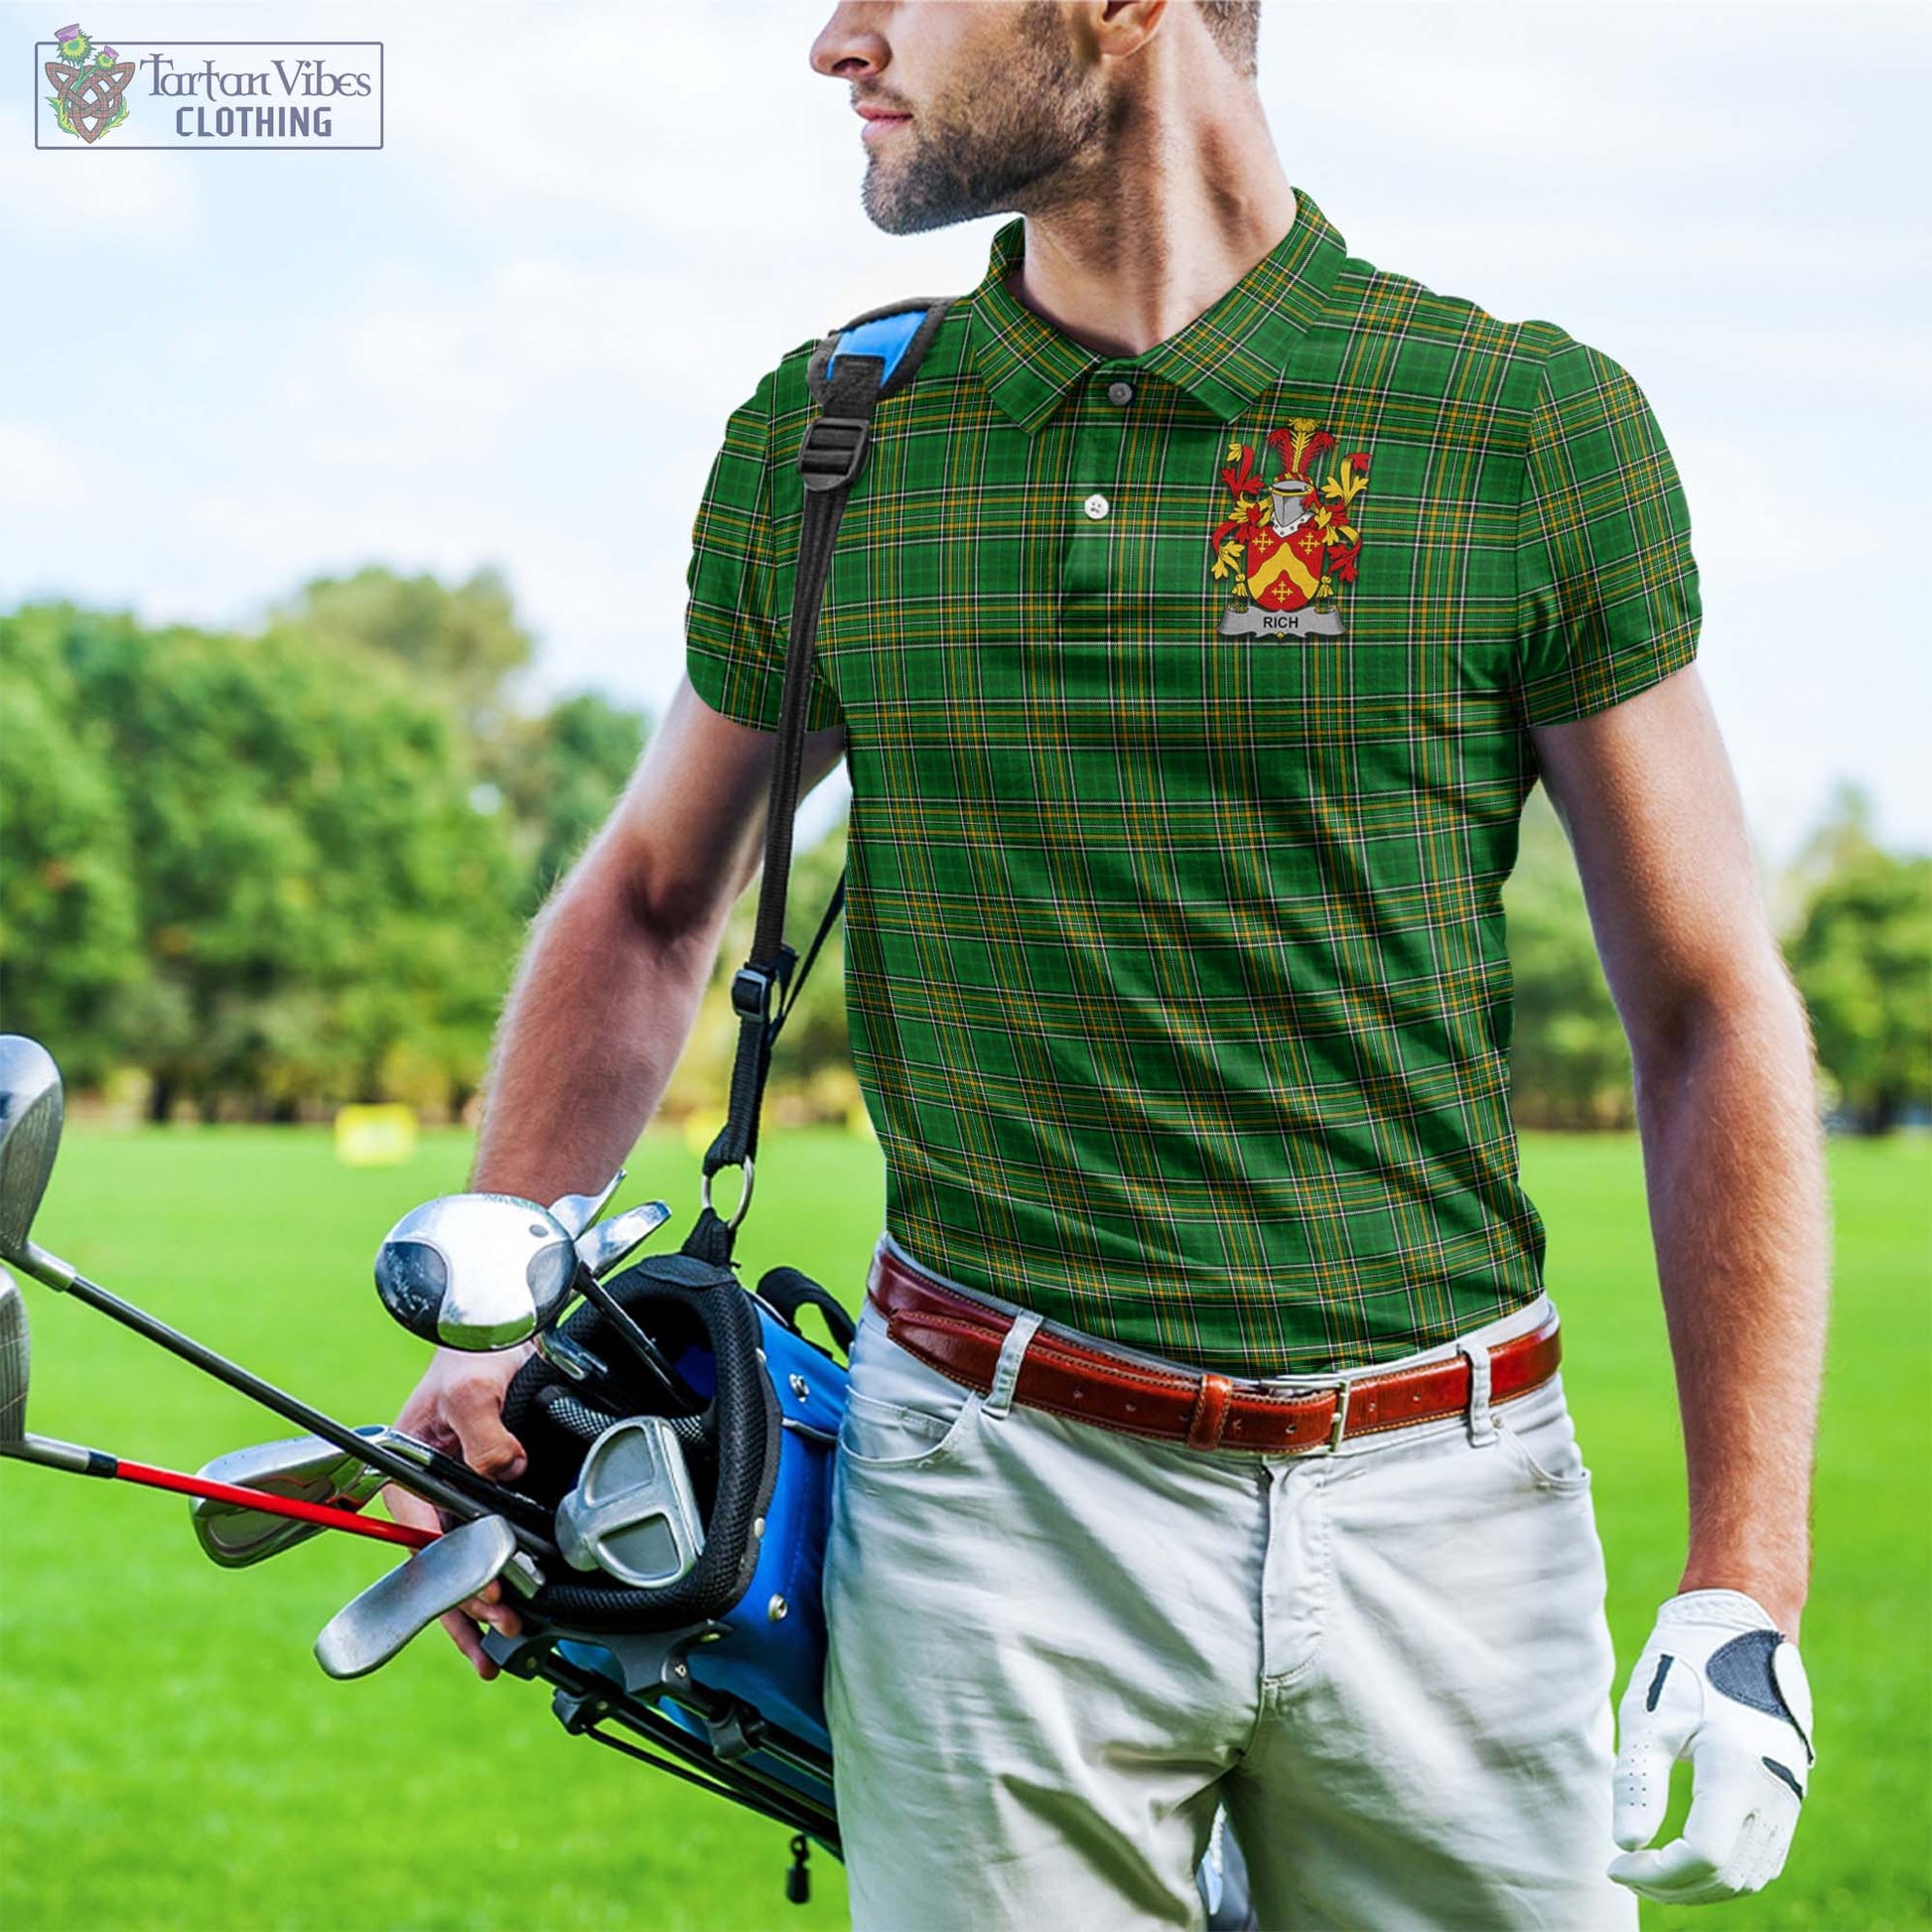 Tartan Vibes Clothing Rich Ireland Clan Tartan Polo Shirt with Coat of Arms